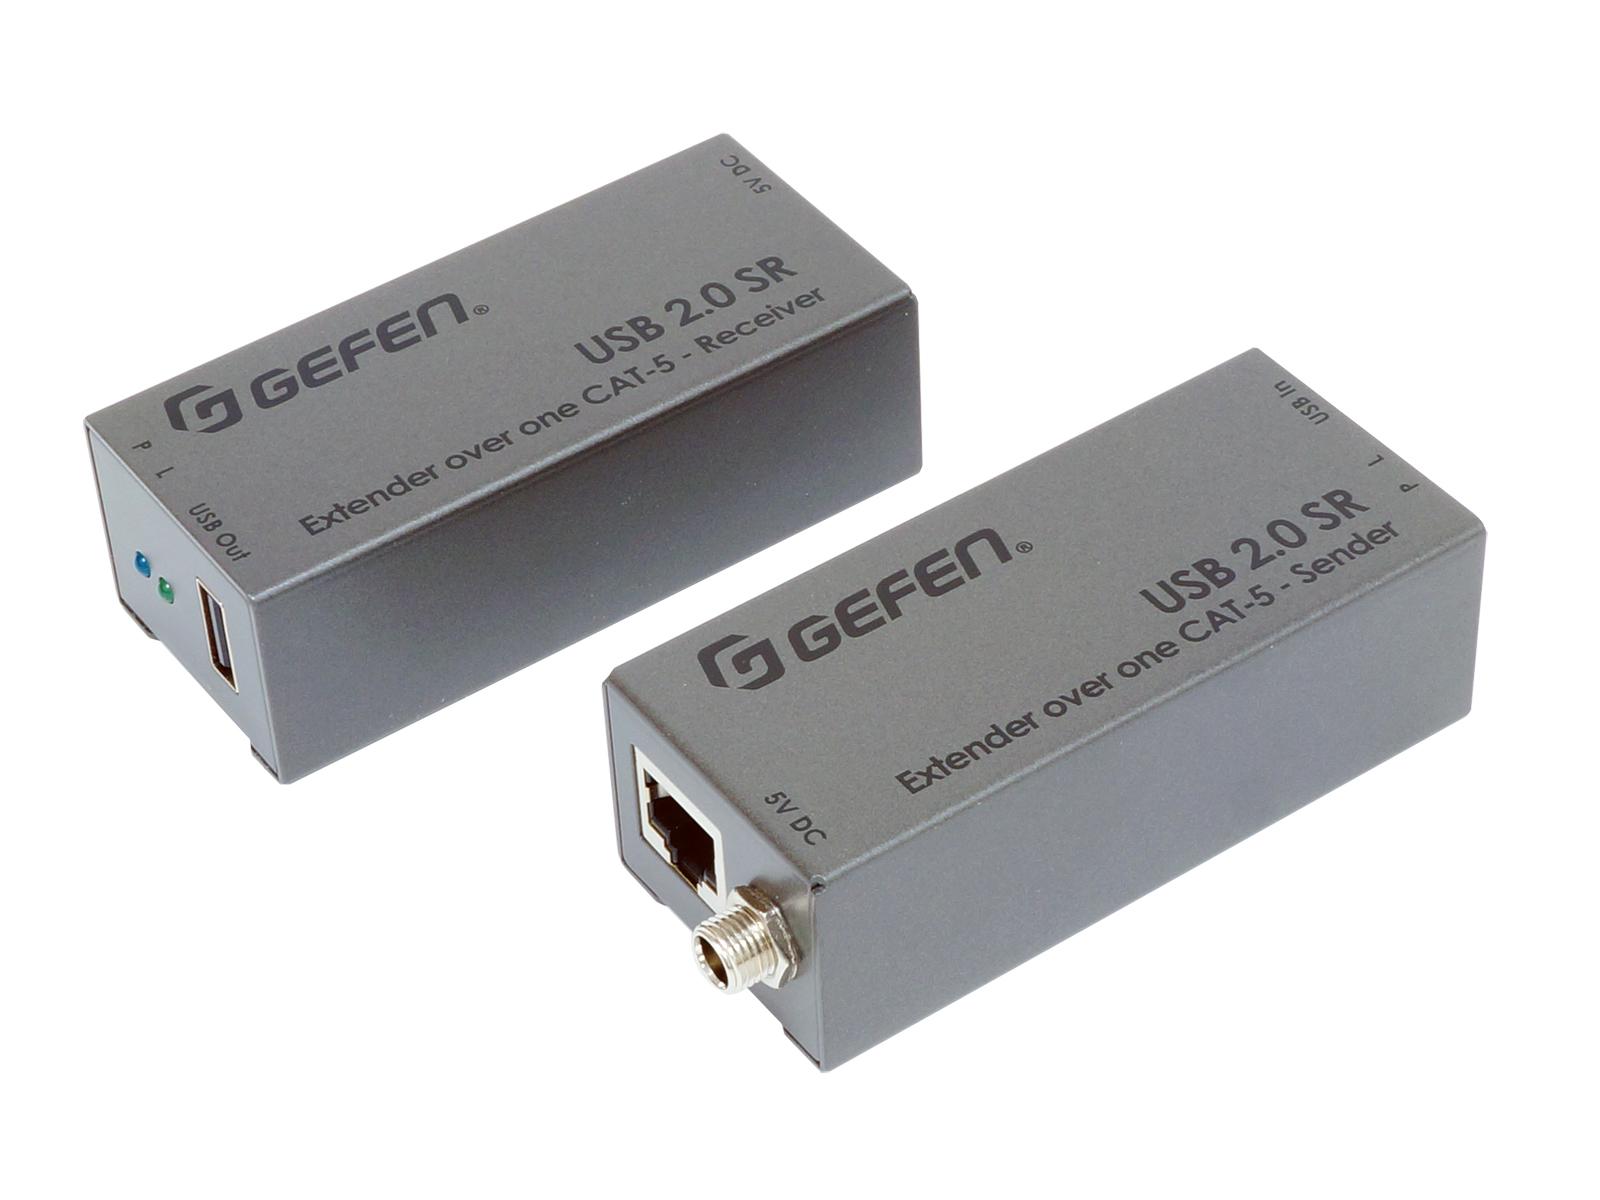 EXT-USB2.0-SR-B USB 2.0 SR Extender (Transmitter/Receiver) Set over one CAT-5 Cable by Gefen